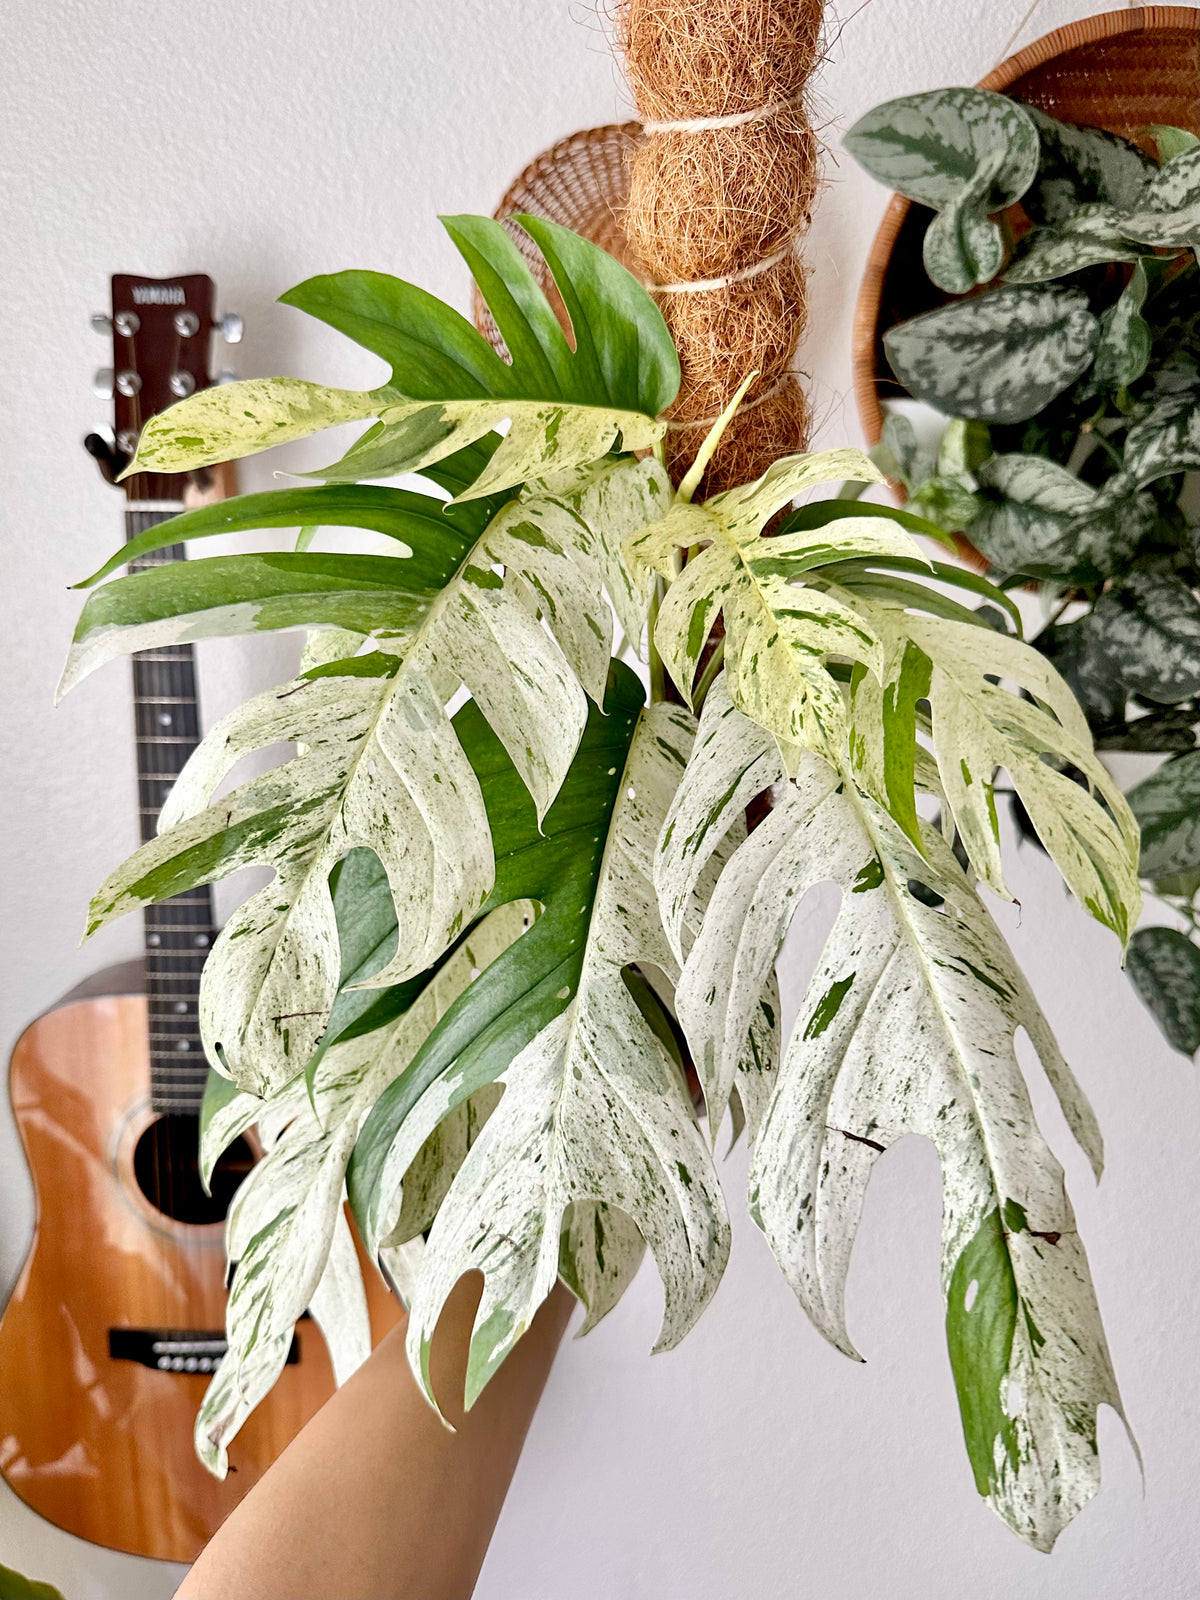 Epipremnum Pinnatum Marble - Rare - Jiffy Plants